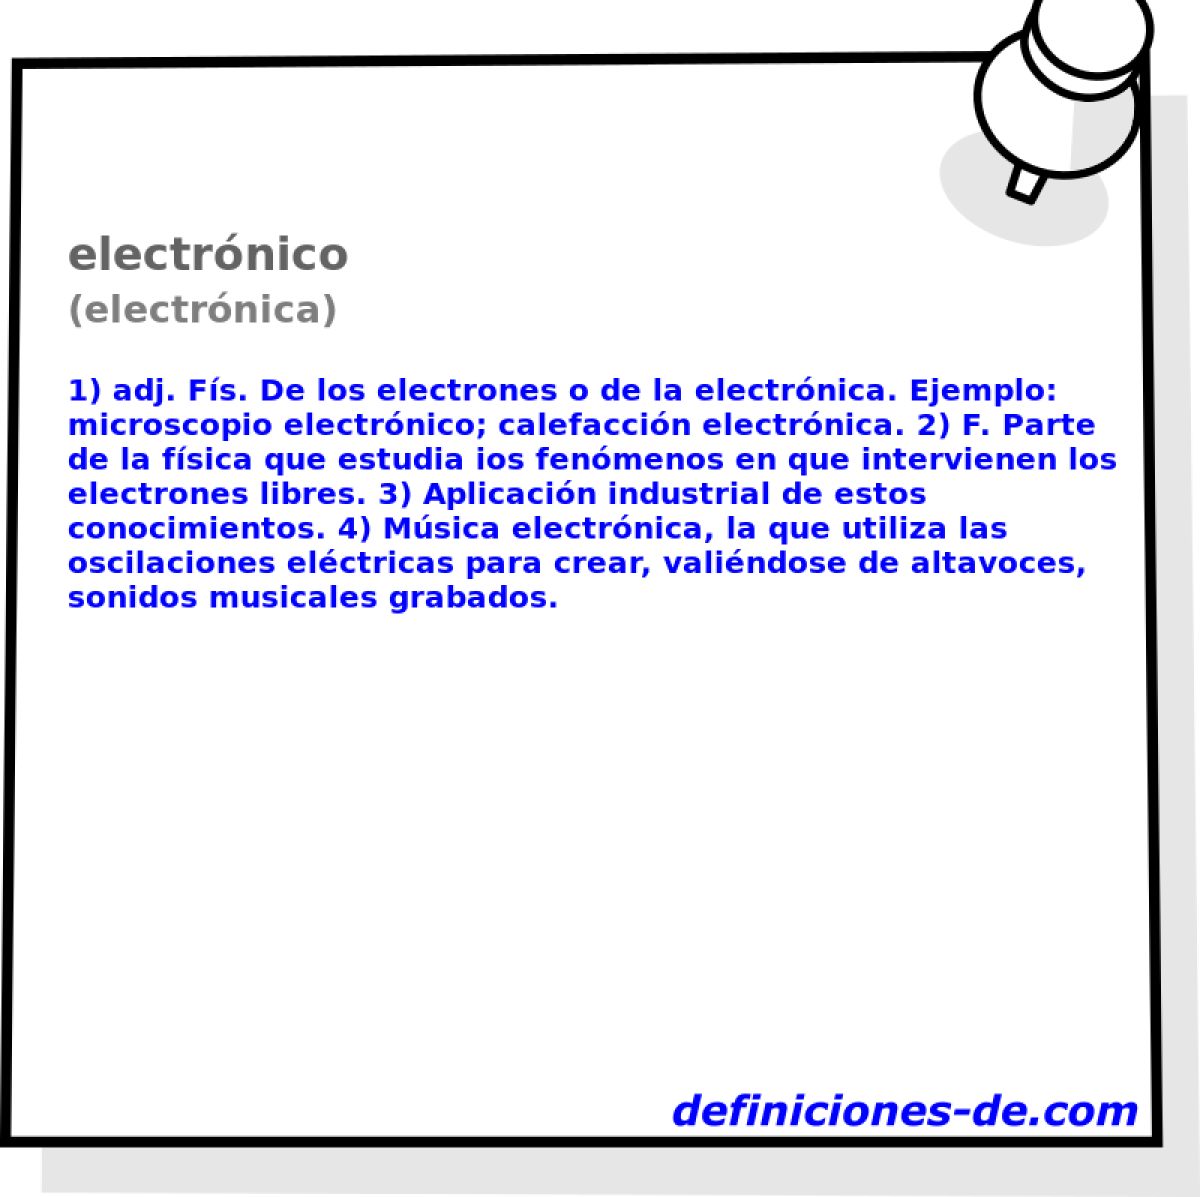 electrnico (electrnica)